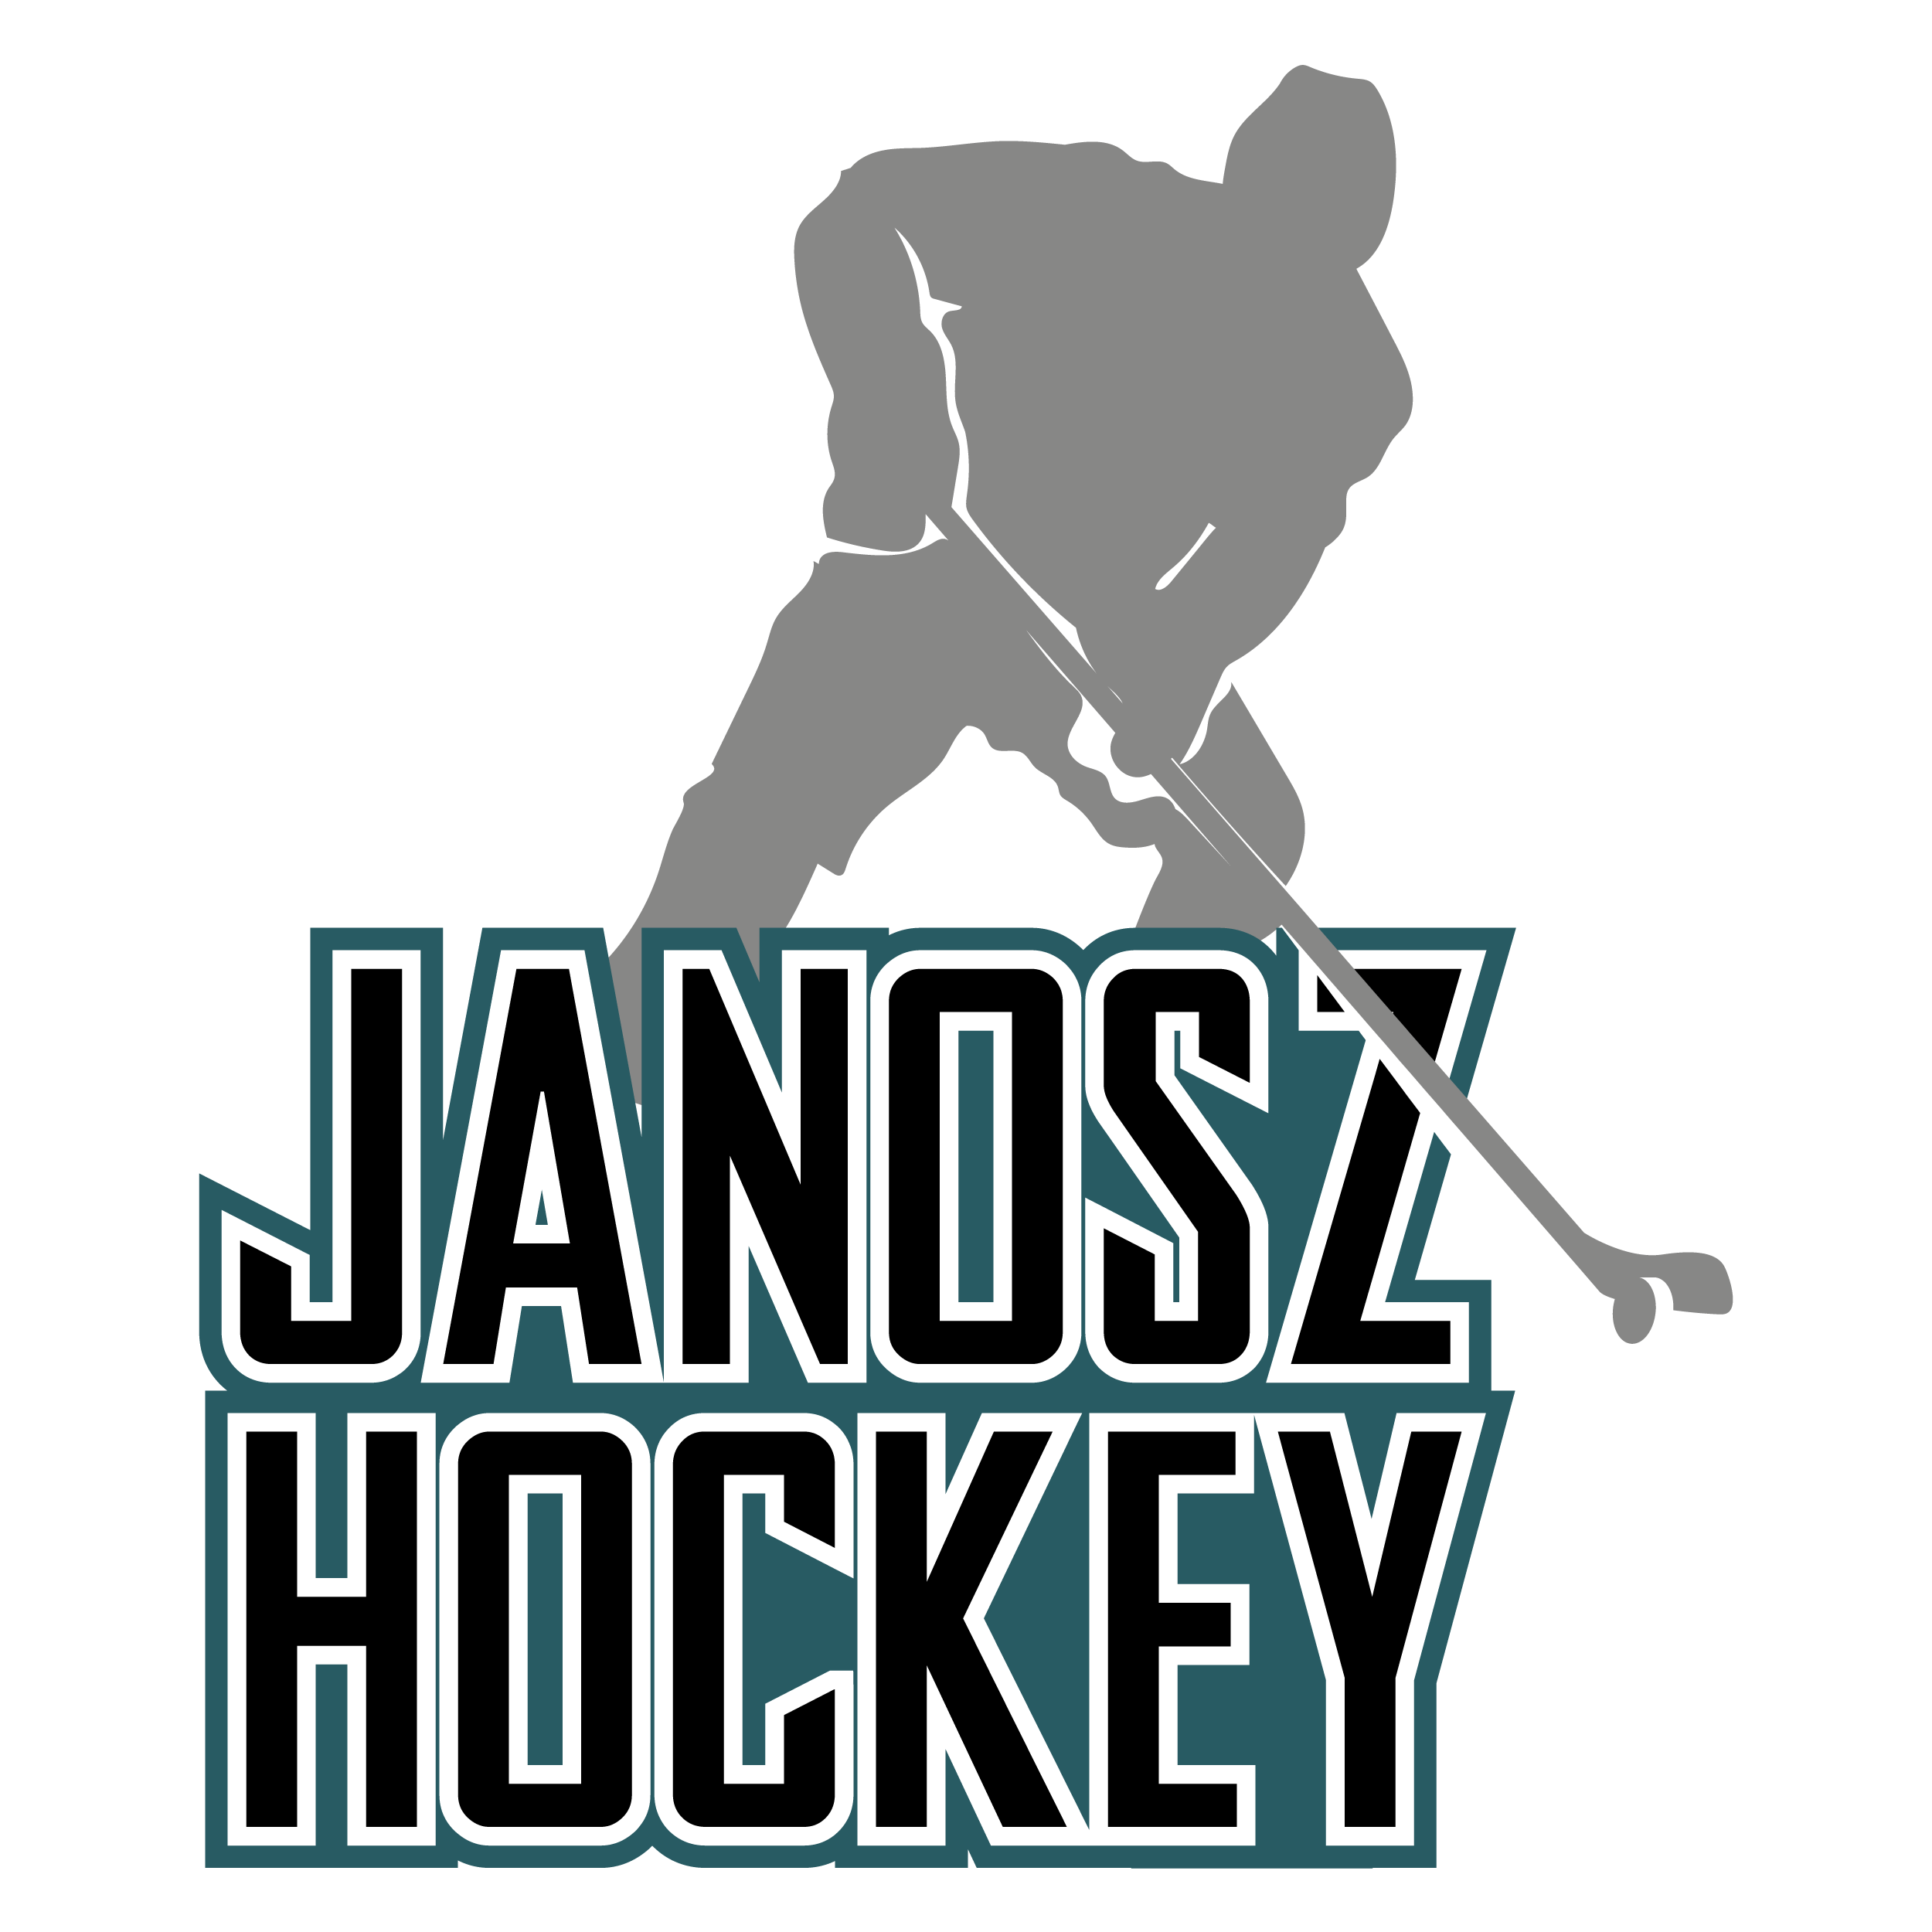 Janosz Hockey